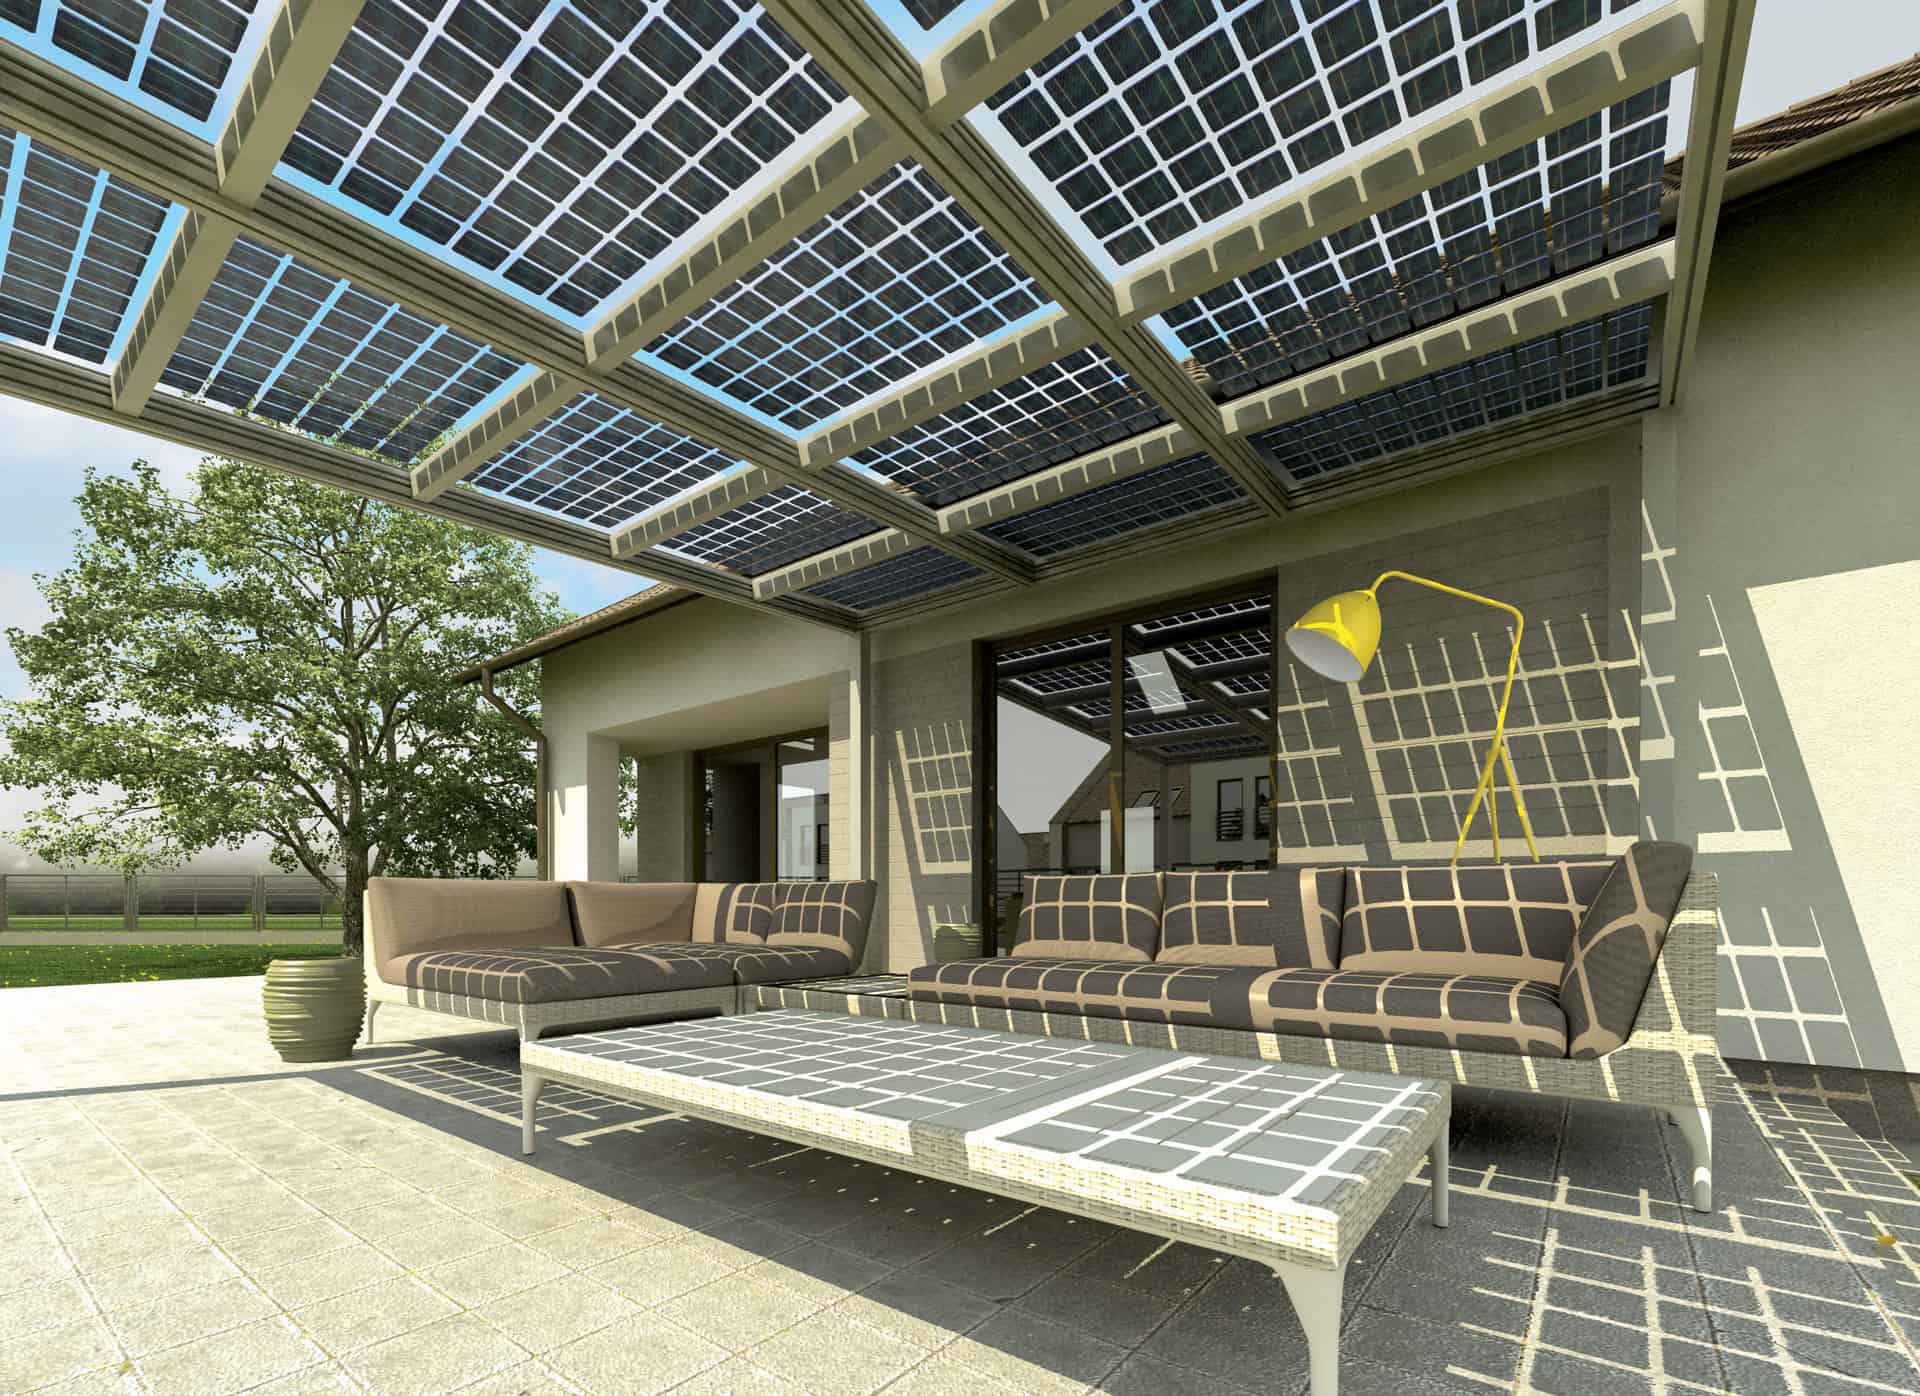 Concept / PV patio canopy